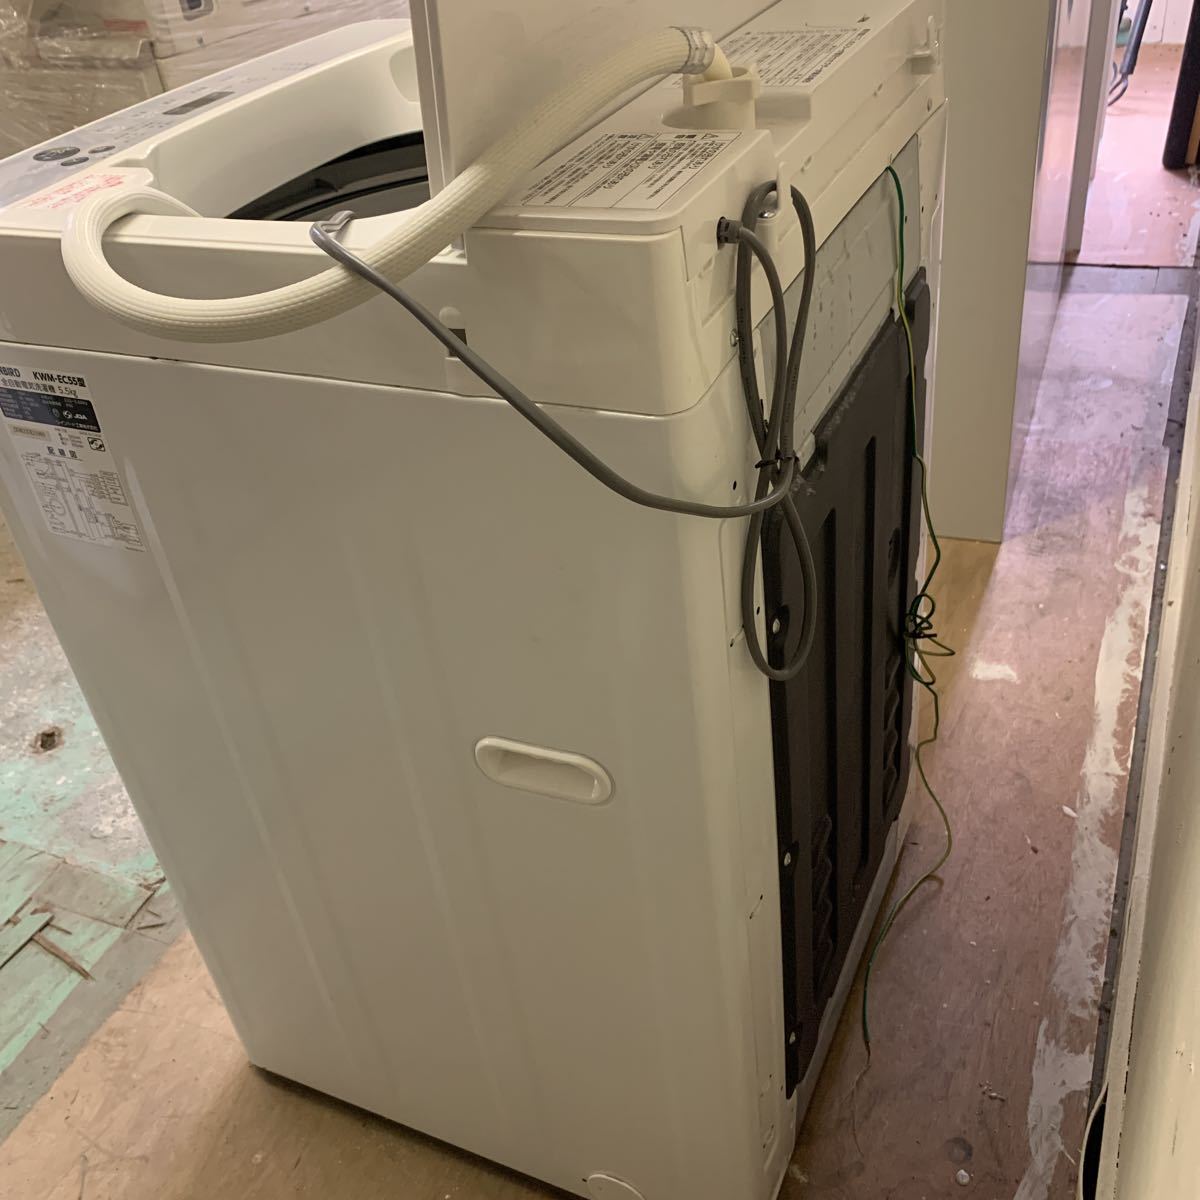 TWINBIRD ツインバード KWM-EC55型 全自動洗濯機 ホワイト 2019年製 5.5Kg 家電製品 洗濯機 傷汚れあり_画像8